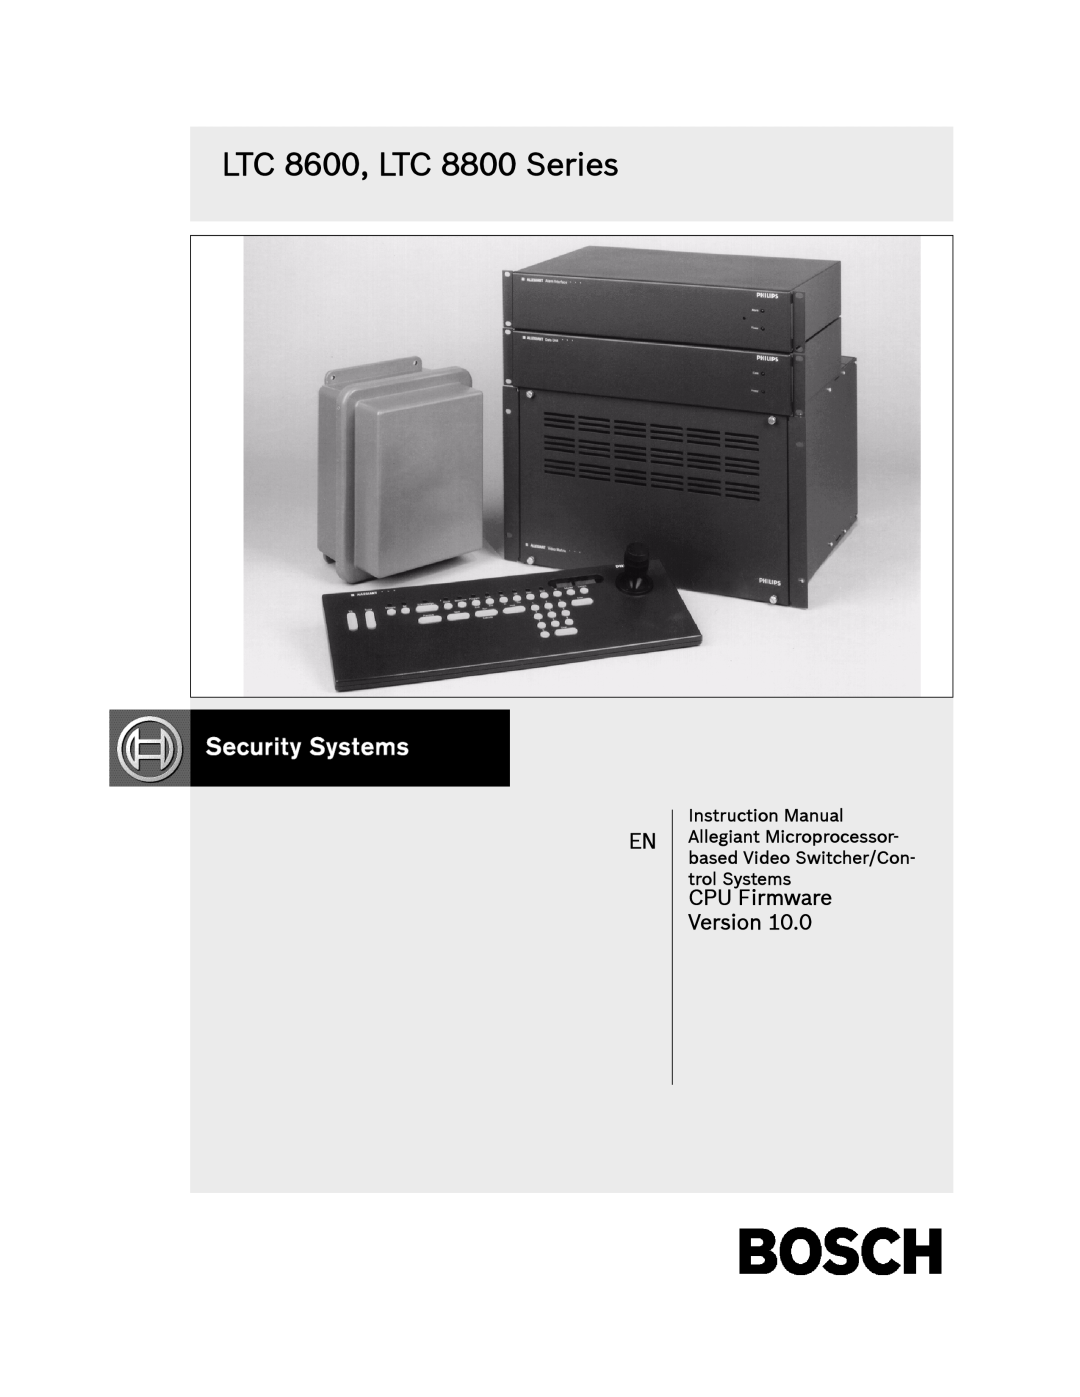 Bosch Appliances instruction manual LTC 8600, LTC 8800 Series, CPU Firmware Version 